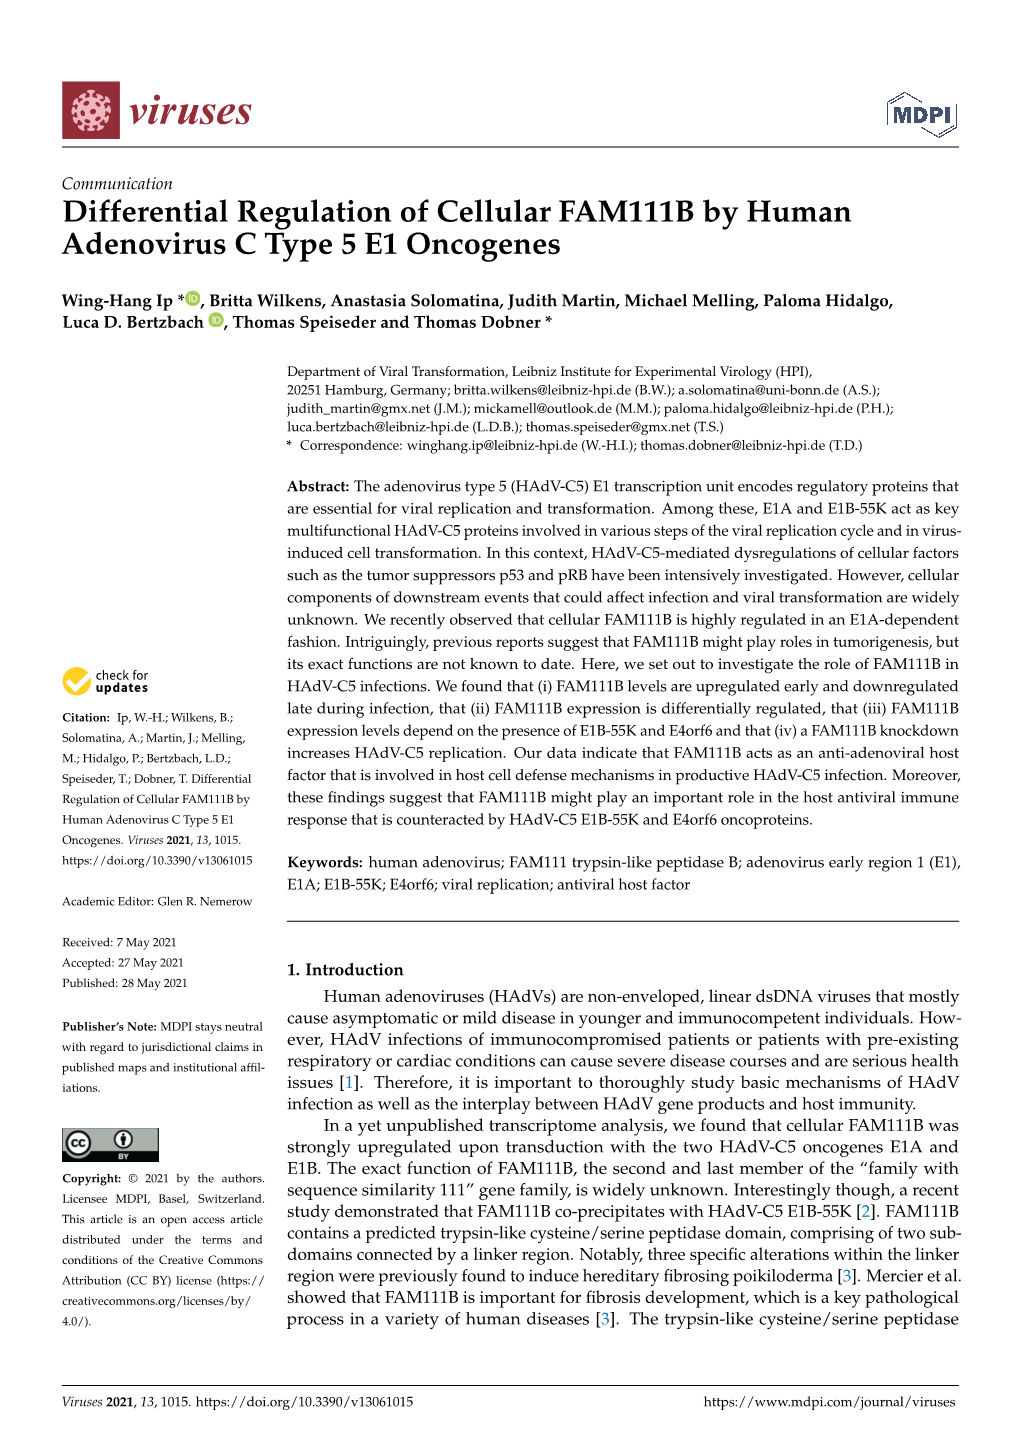 Differential Regulation of Cellular FAM111B by Human Adenovirus C Type 5 E1 Oncogenes